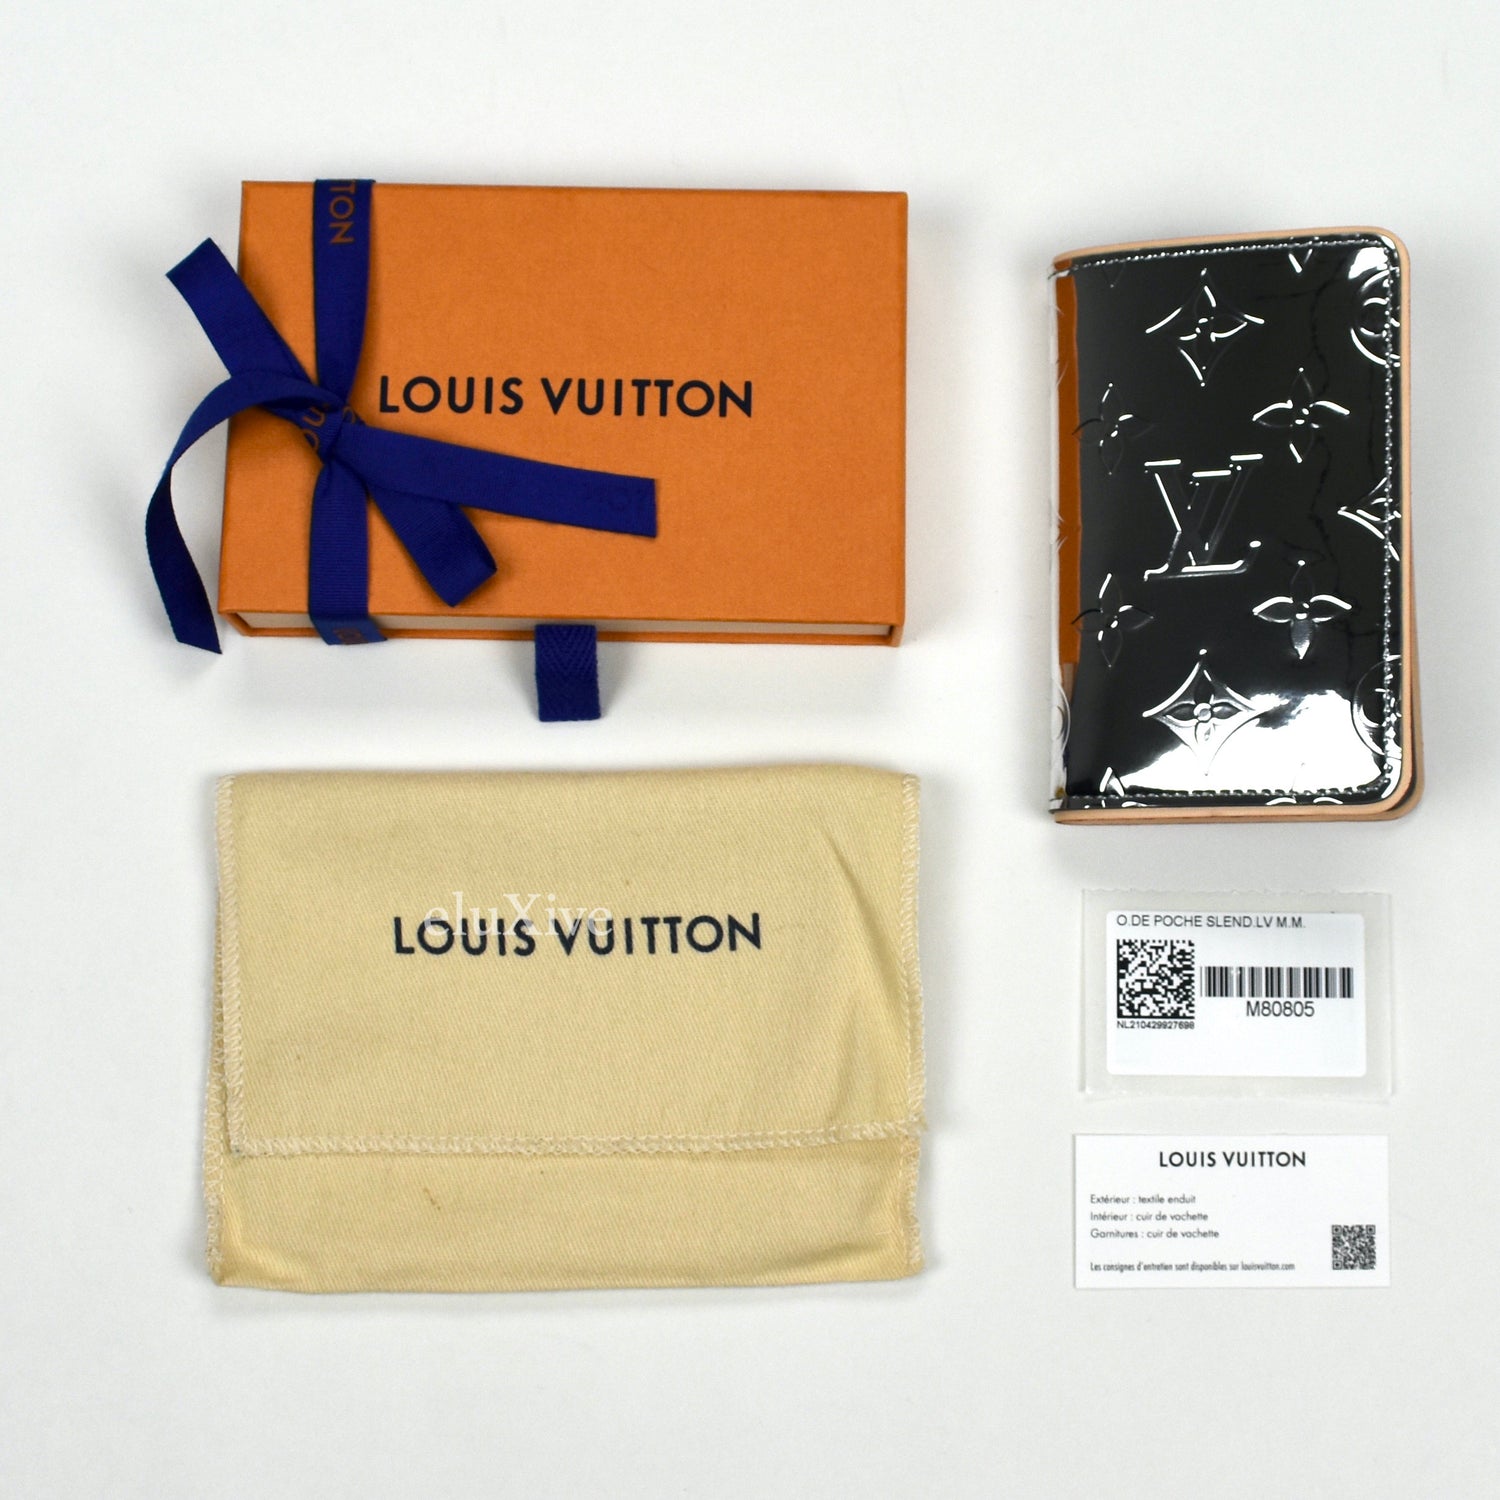 Rare Cheapest LV Louis Vuitton Mirror Slender Pocket Organizer